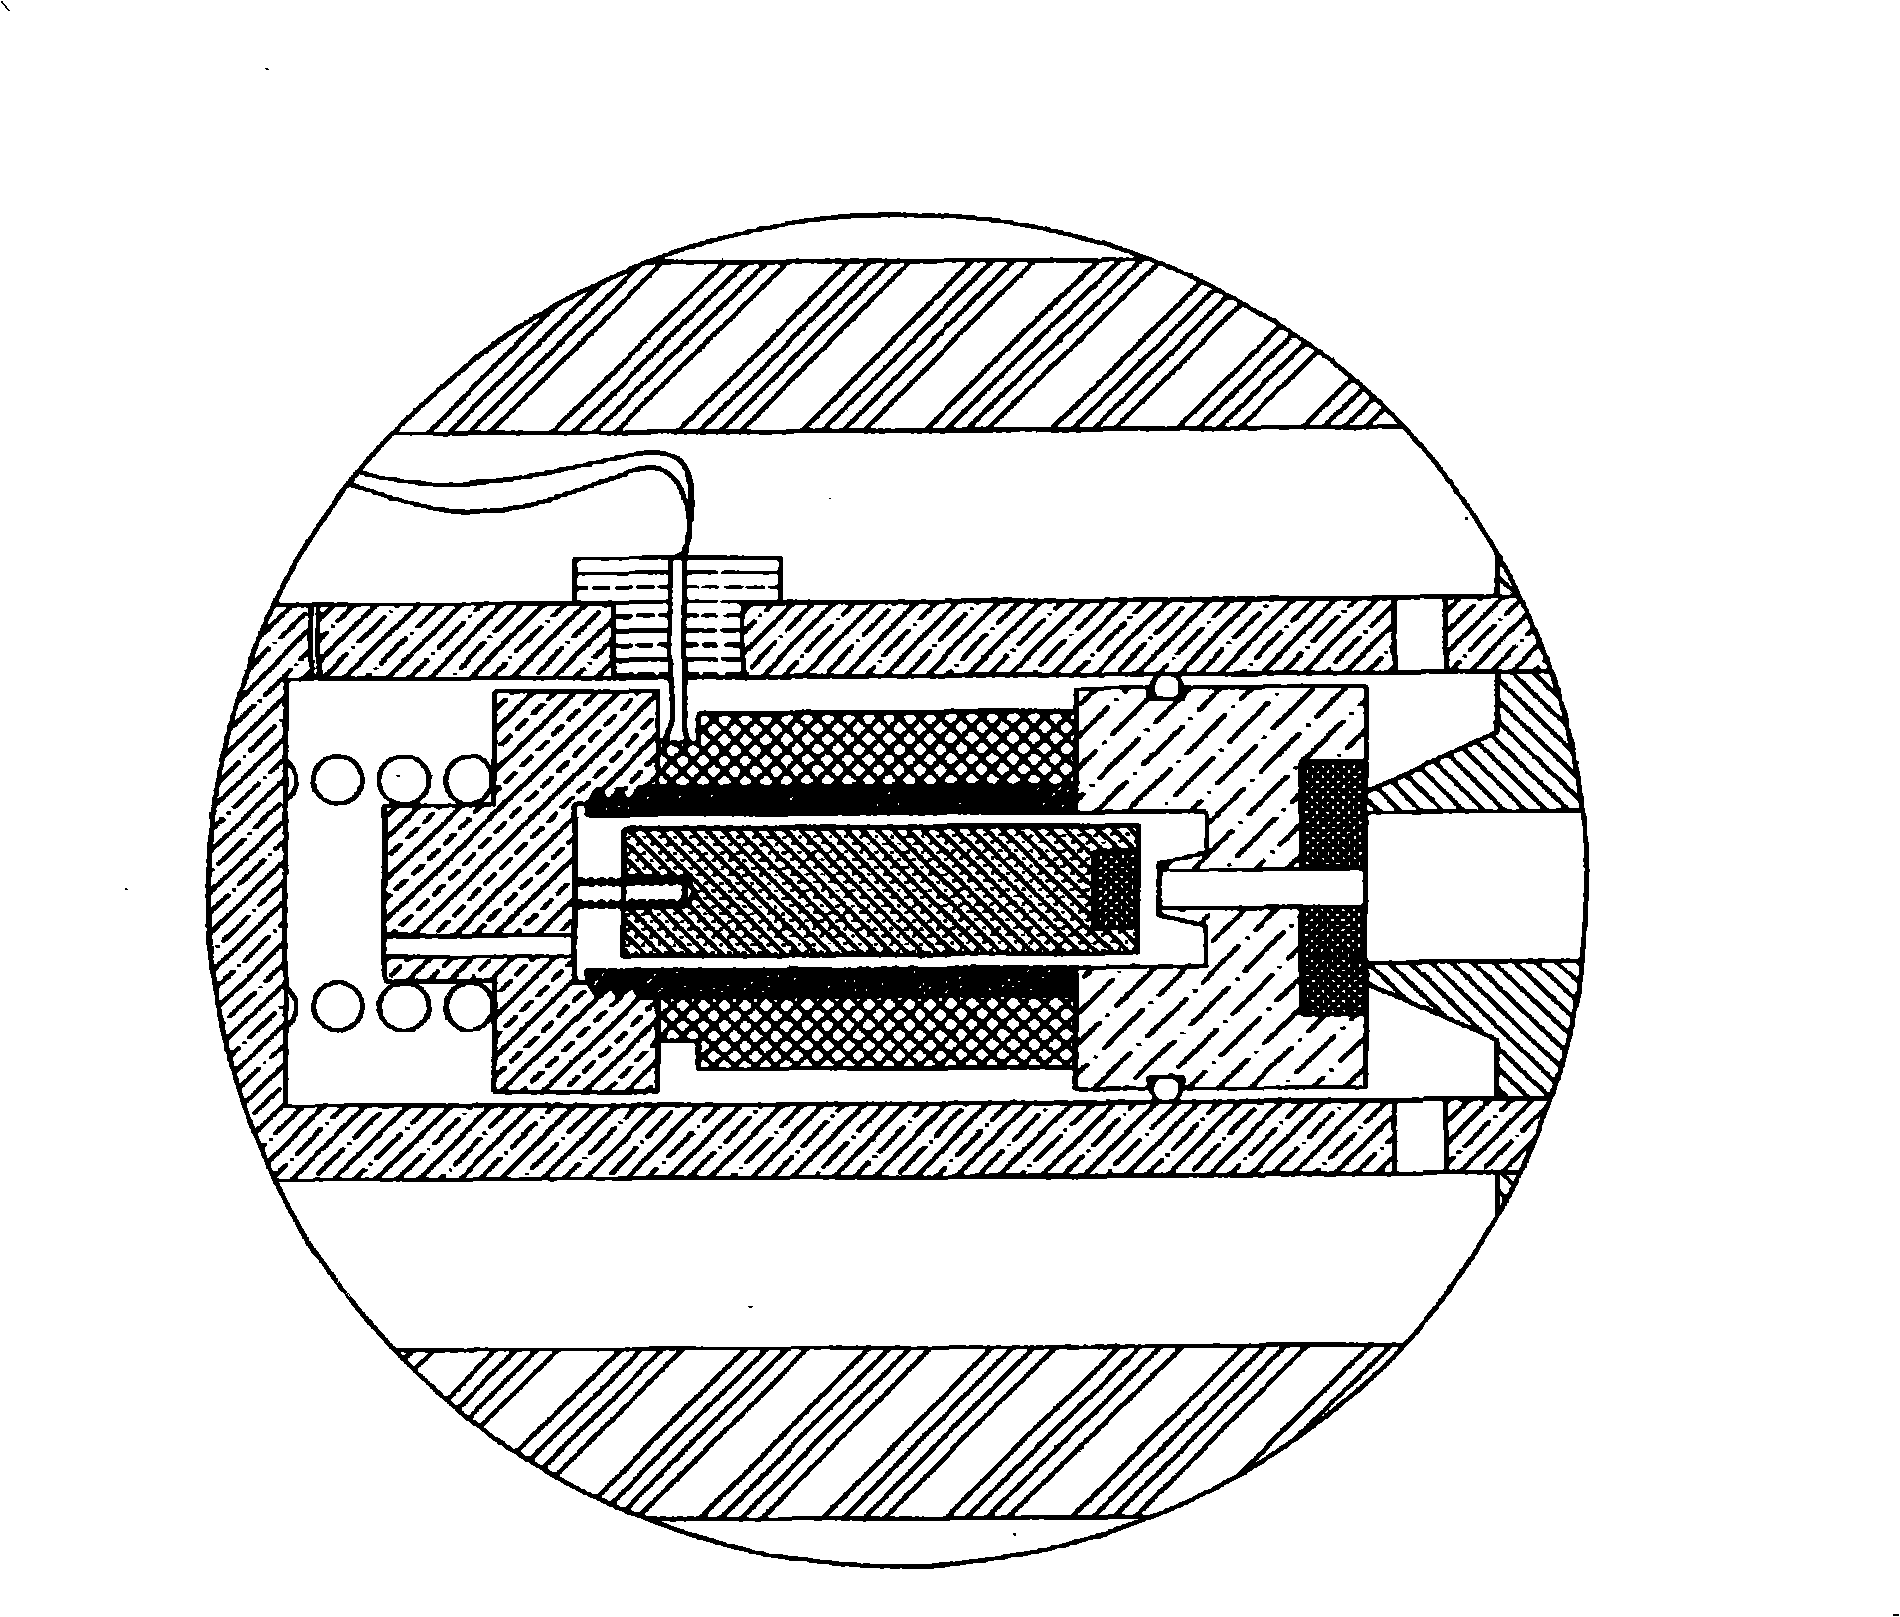 Gas valve of tubular solenoid